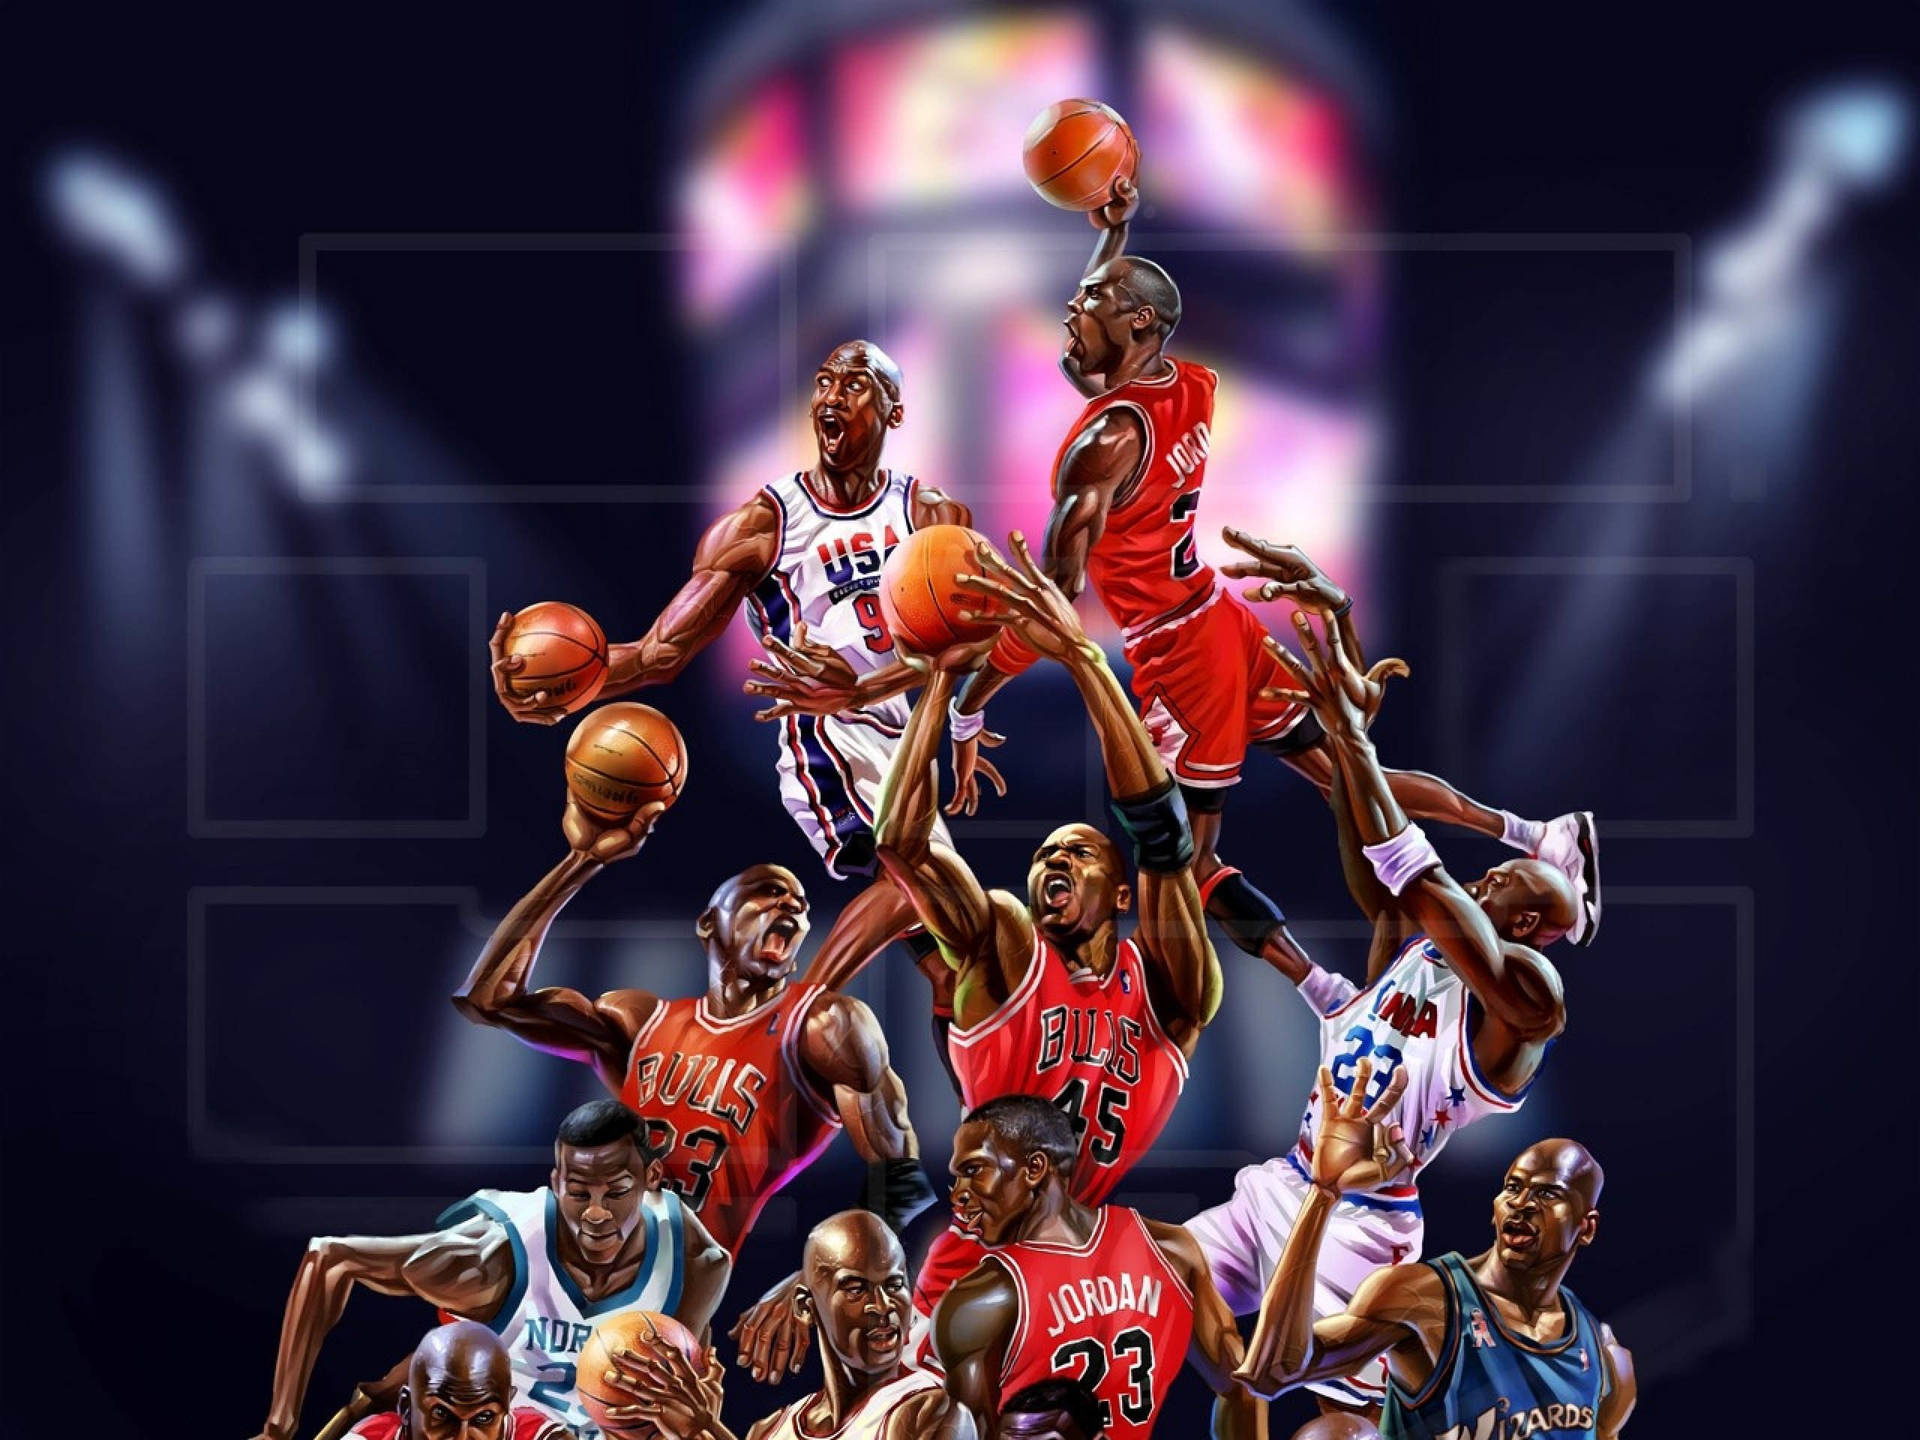 "Jordan Basketball - Above and Beyond" Wallpaper